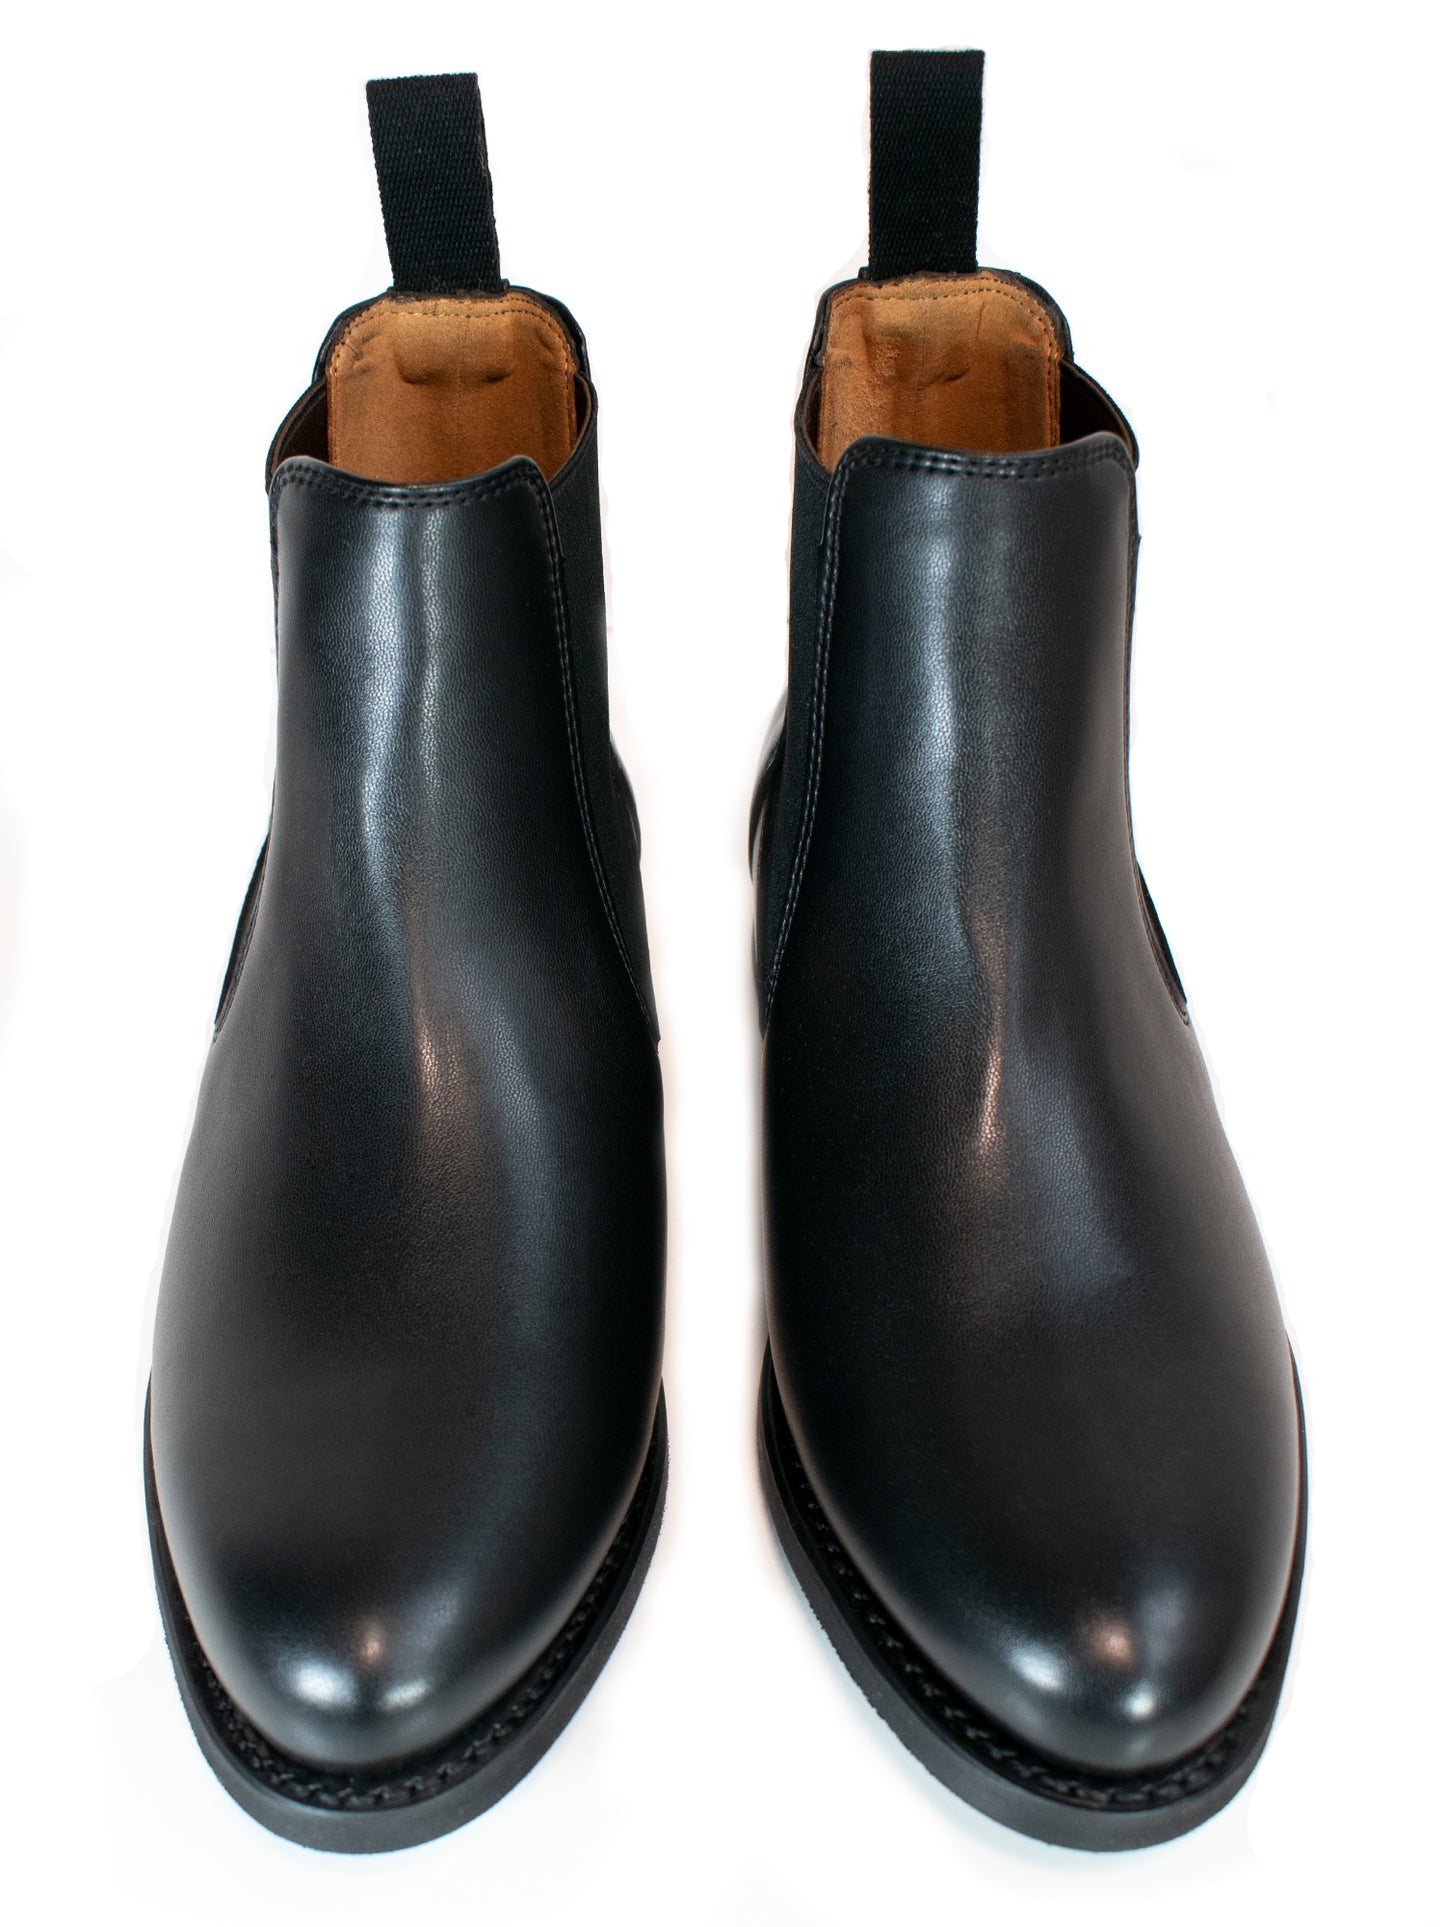 Goodyear Welt Chelsea Boots